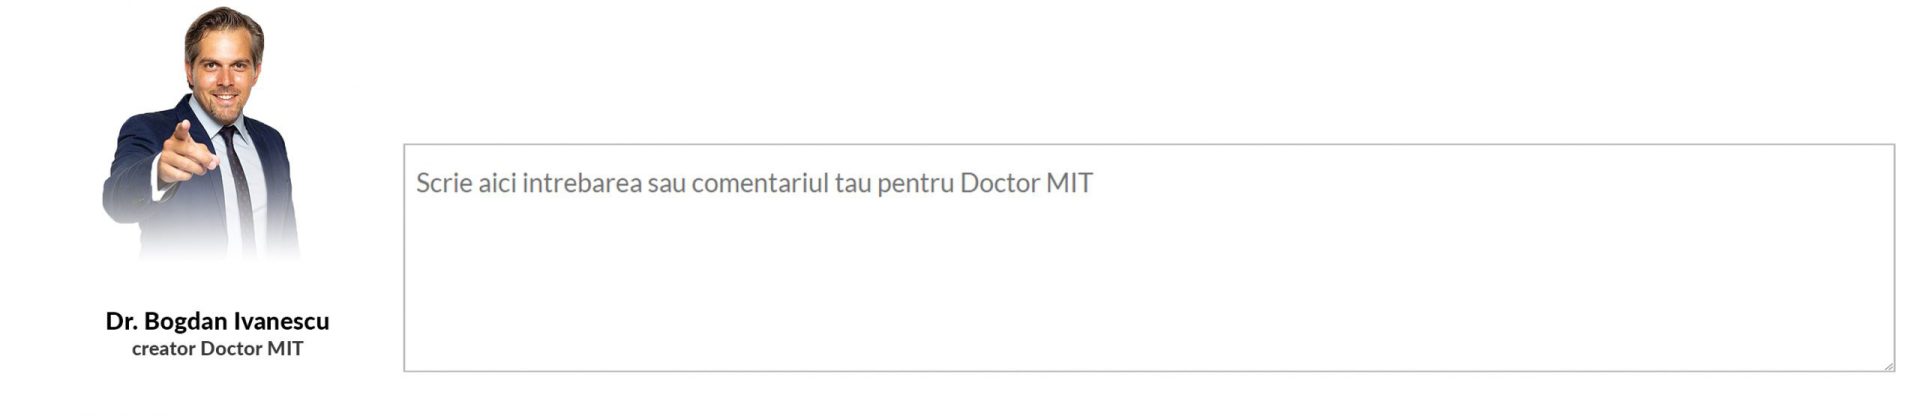 Doctor Mit, Intreaba-ma,